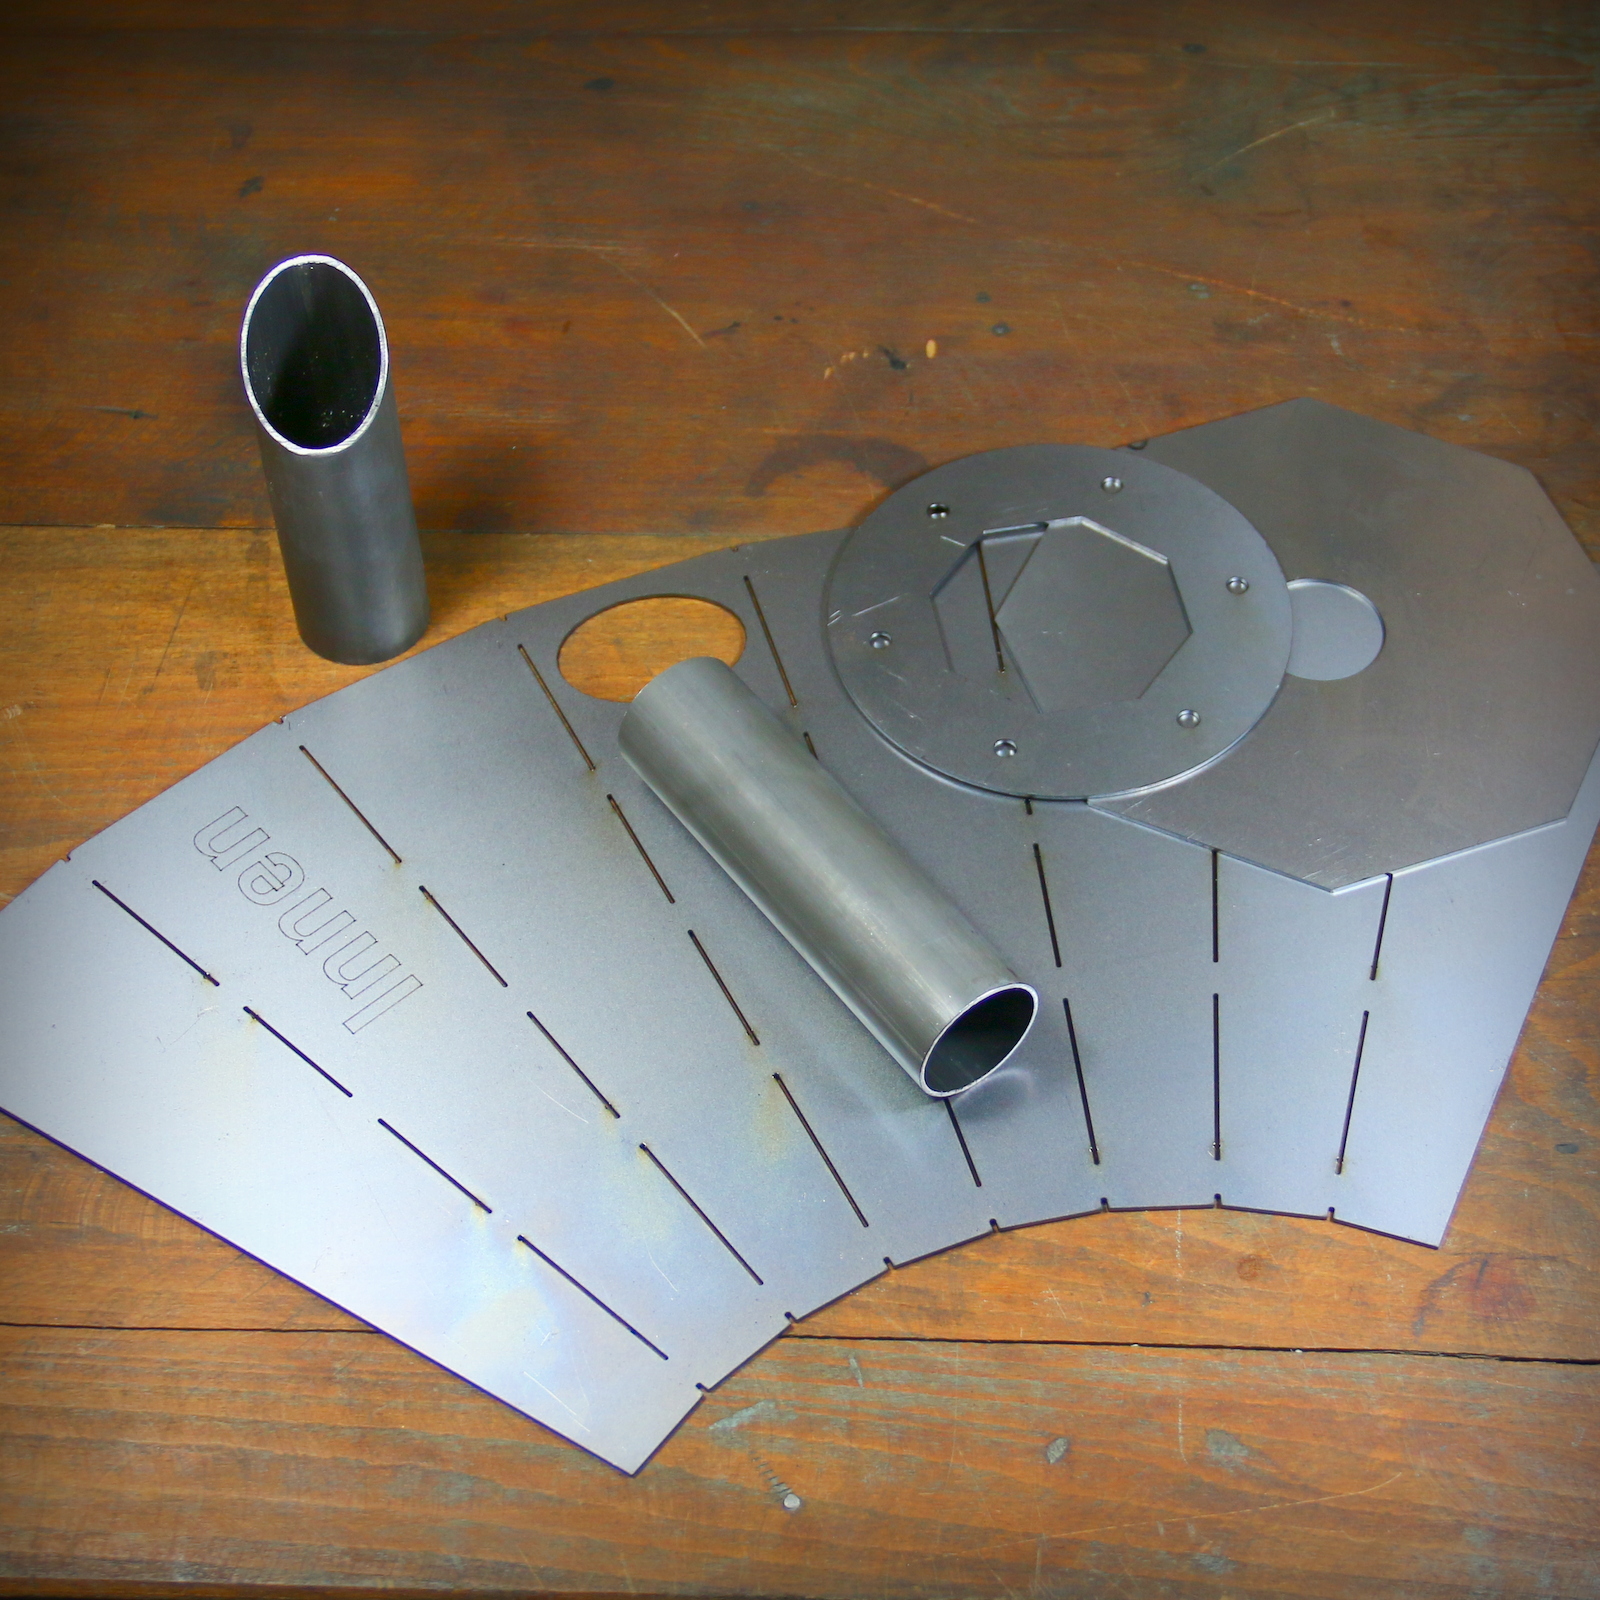 Cyclone separator made of metal / welding kit